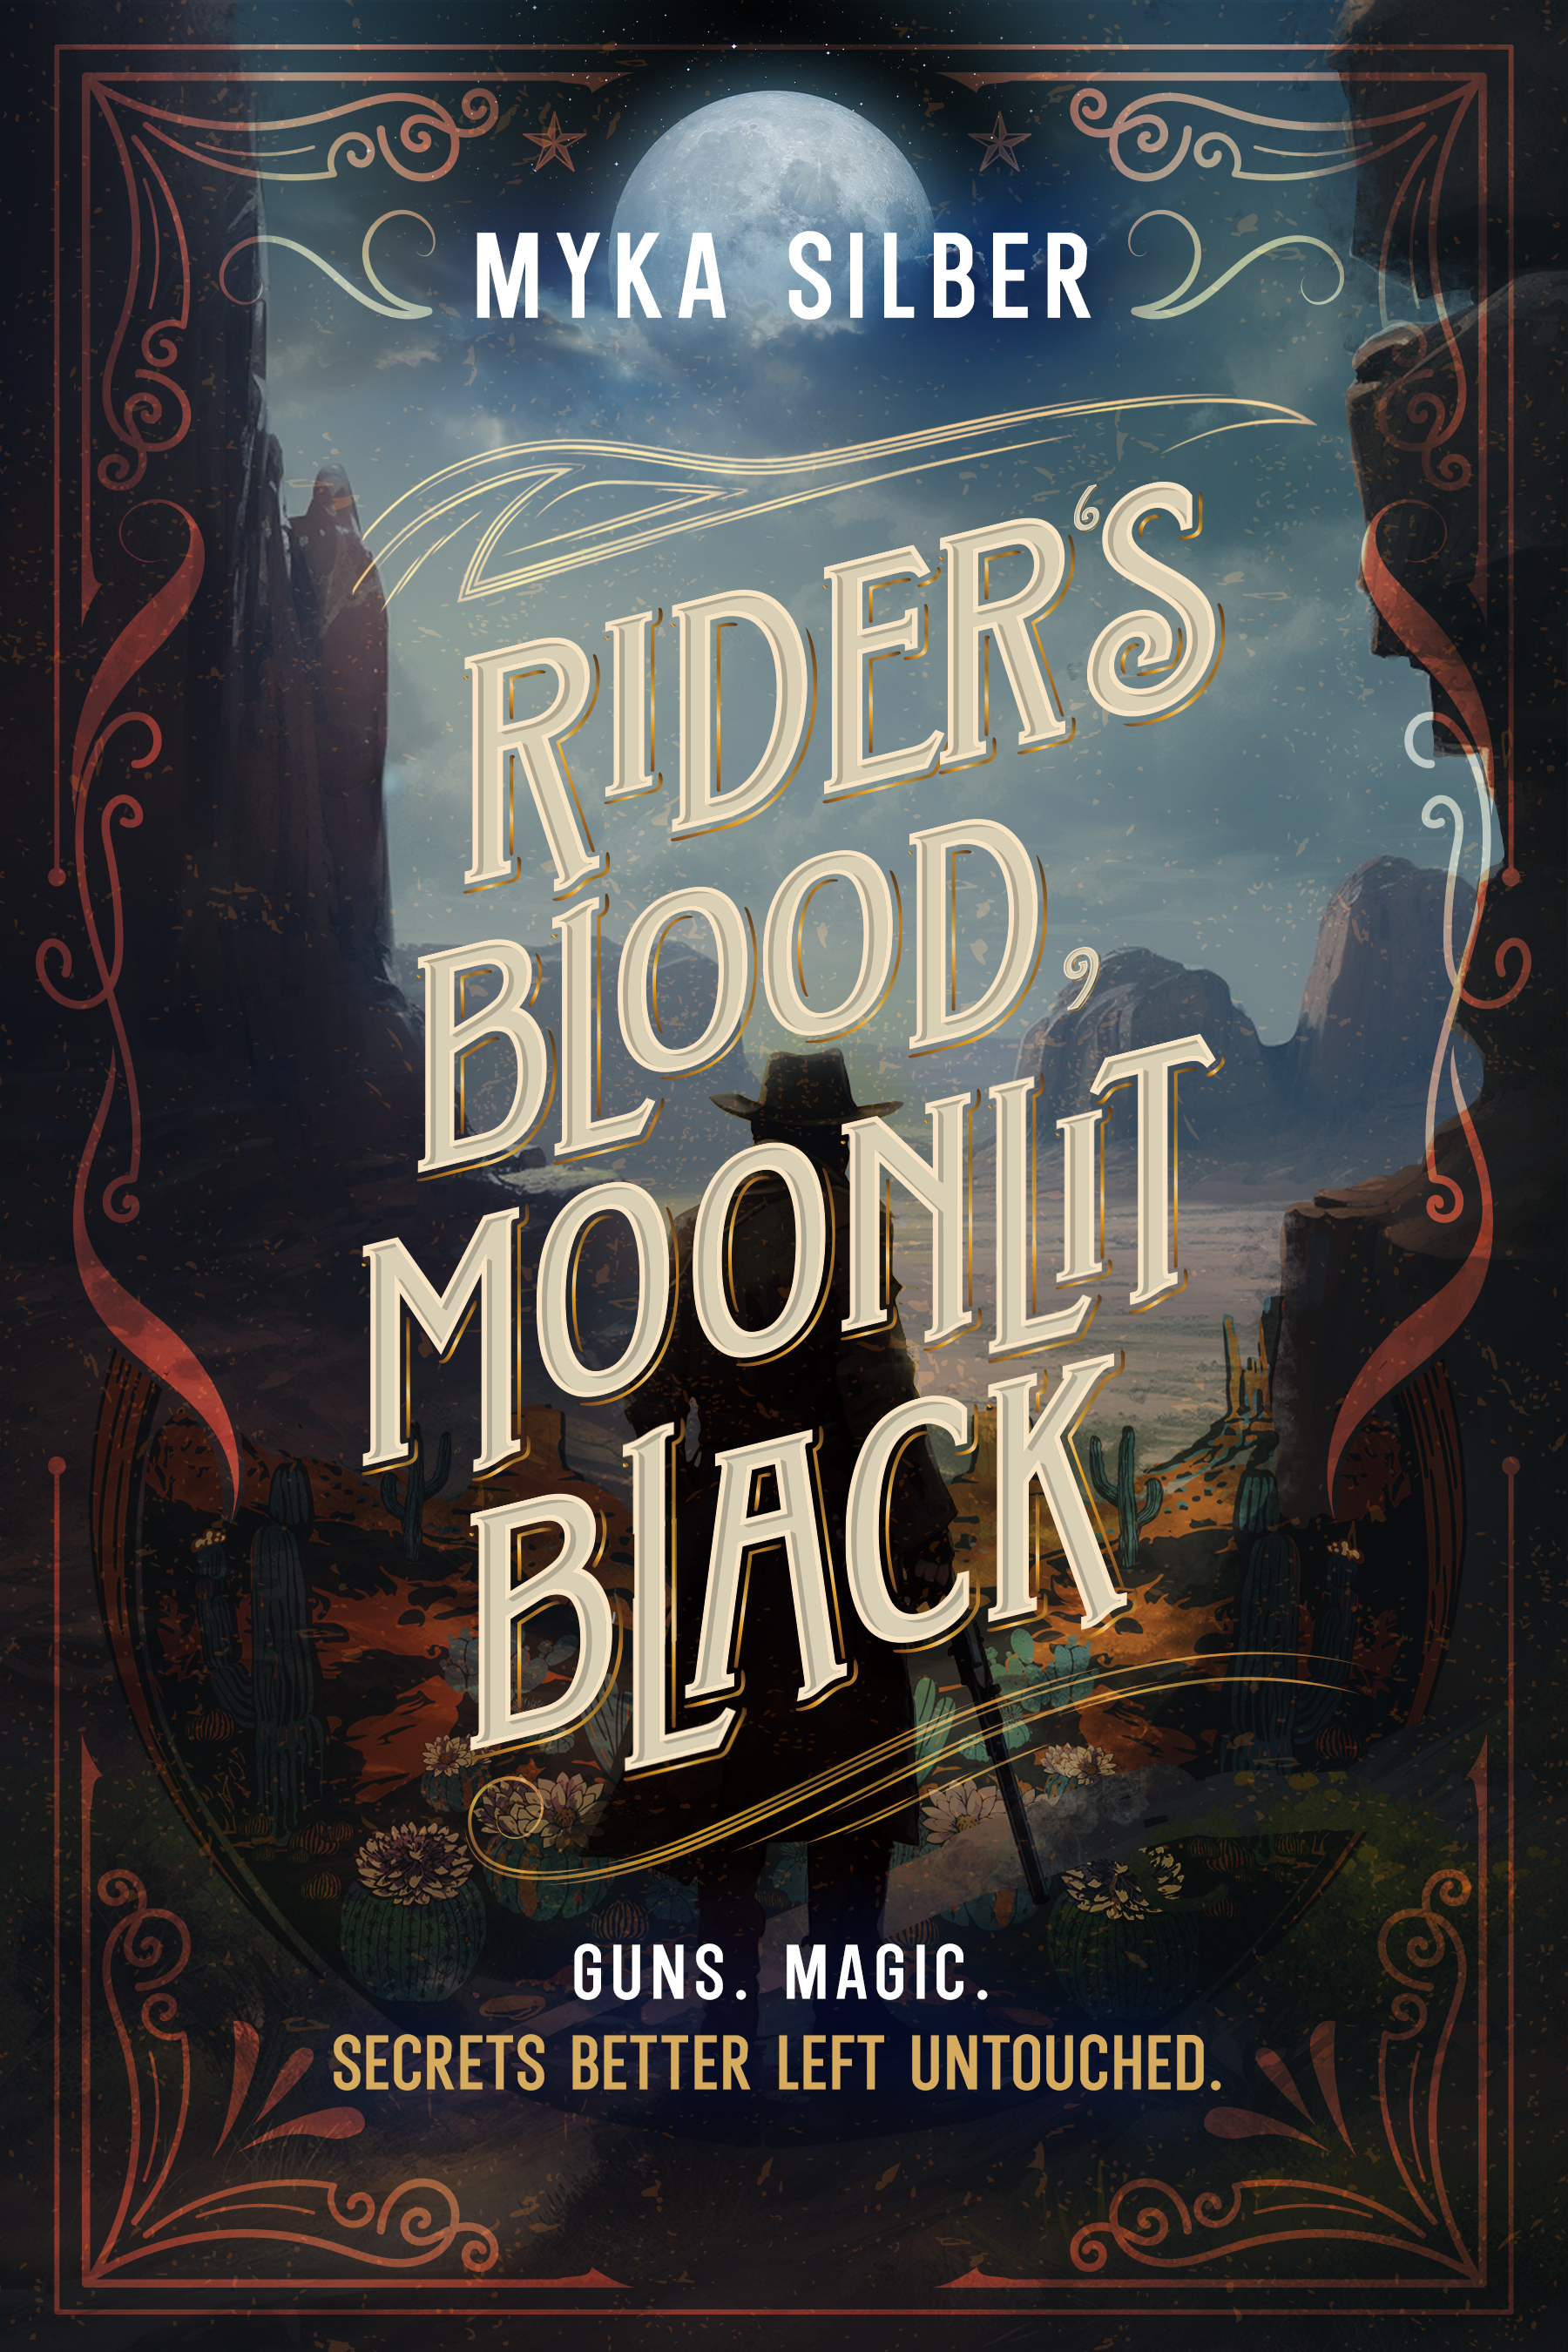 Rider's Blood Moonlit Black by Myka Silber